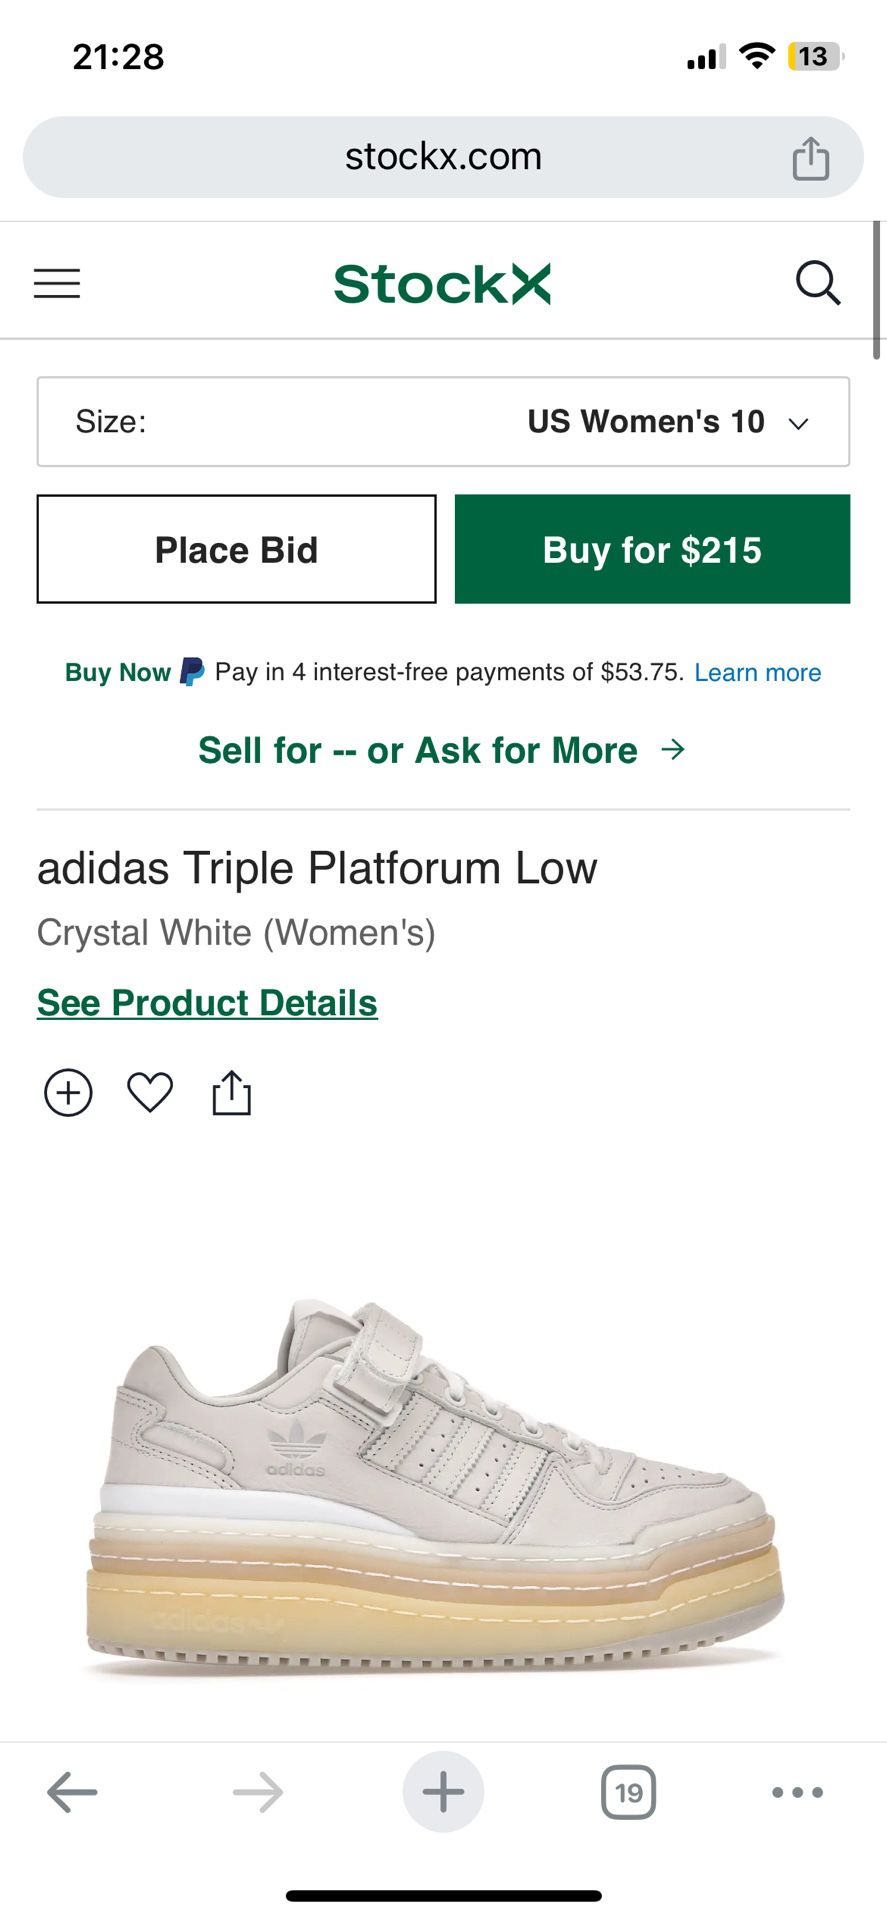 Adidas Triple Platforum Low